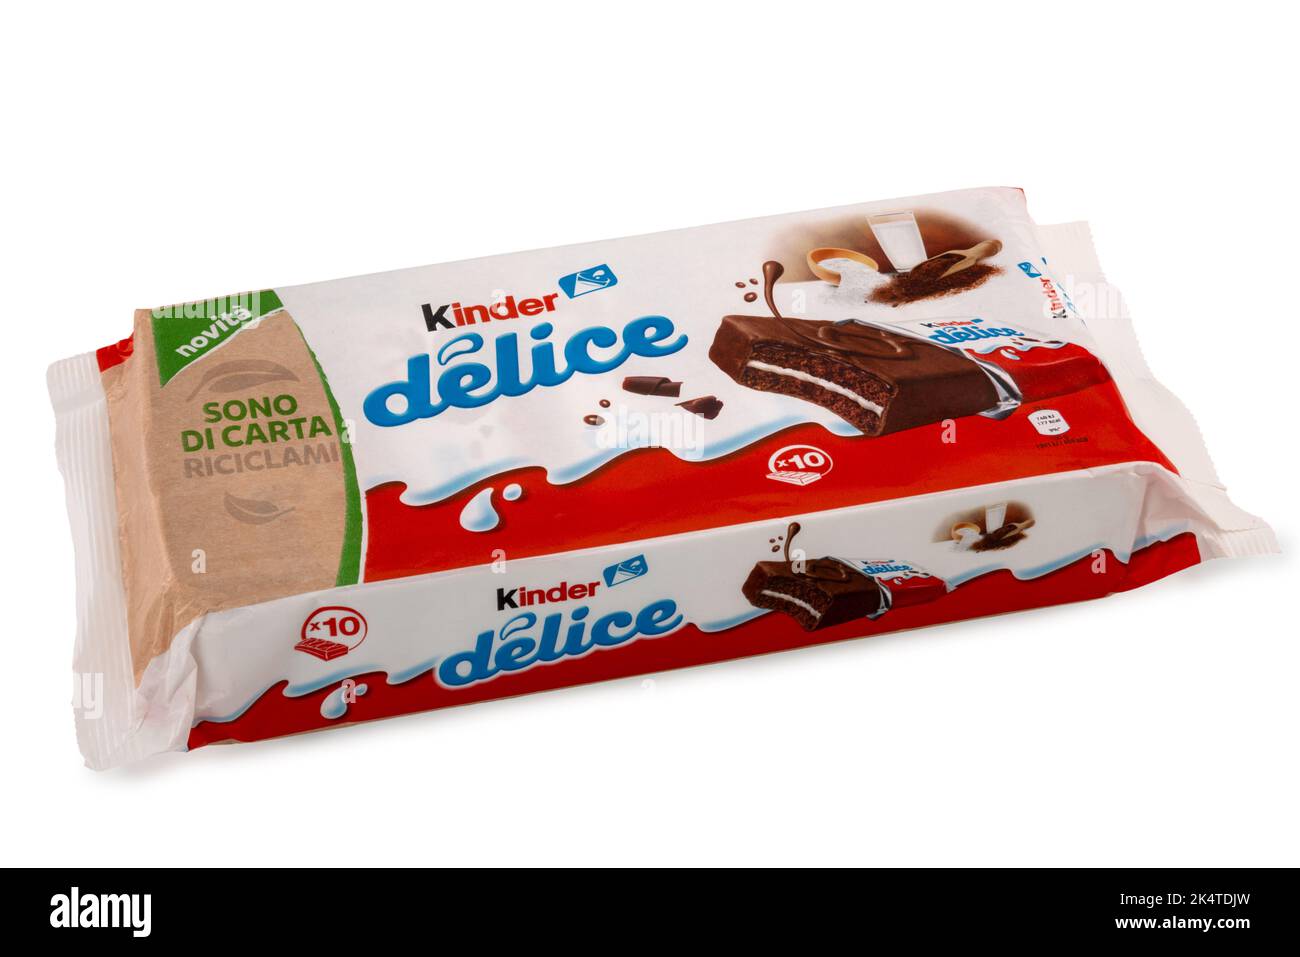 Alba, Italy - October 04, 2022: Kinder Delice Ferrero italian confection, with ten snacks, made in paper to be recycled. tex: Sono di Carta Reciclami Stock Photo